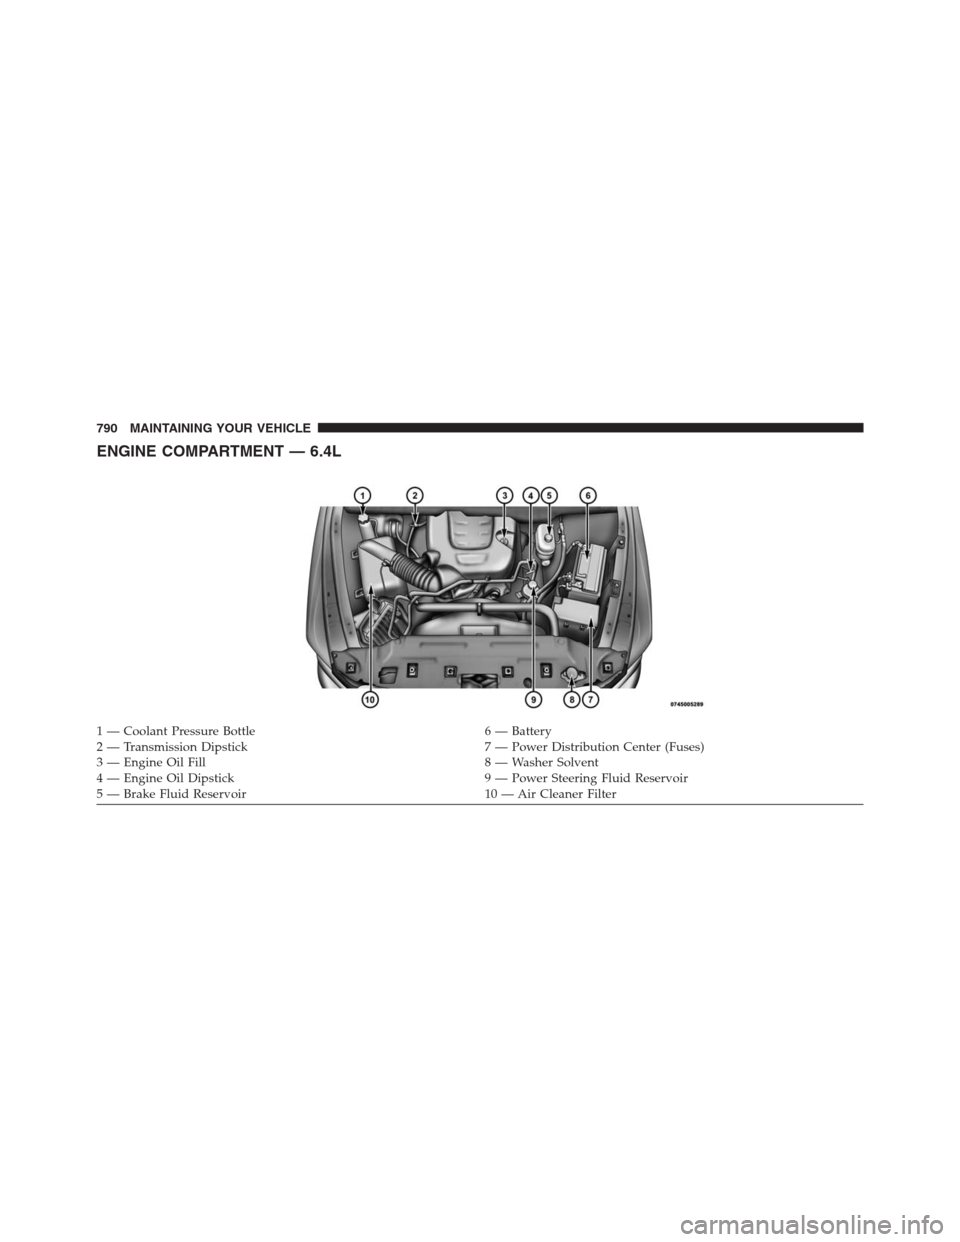 Ram 1500 2016 User Guide ENGINE COMPARTMENT — 6.4L
1 — Coolant Pressure Bottle 6 — Battery
2 — Transmission Dipstick 7 — Power Distribution Center (Fuses)
3 — Engine Oil Fill 8 — Washer Solvent
4 — Engine Oil 